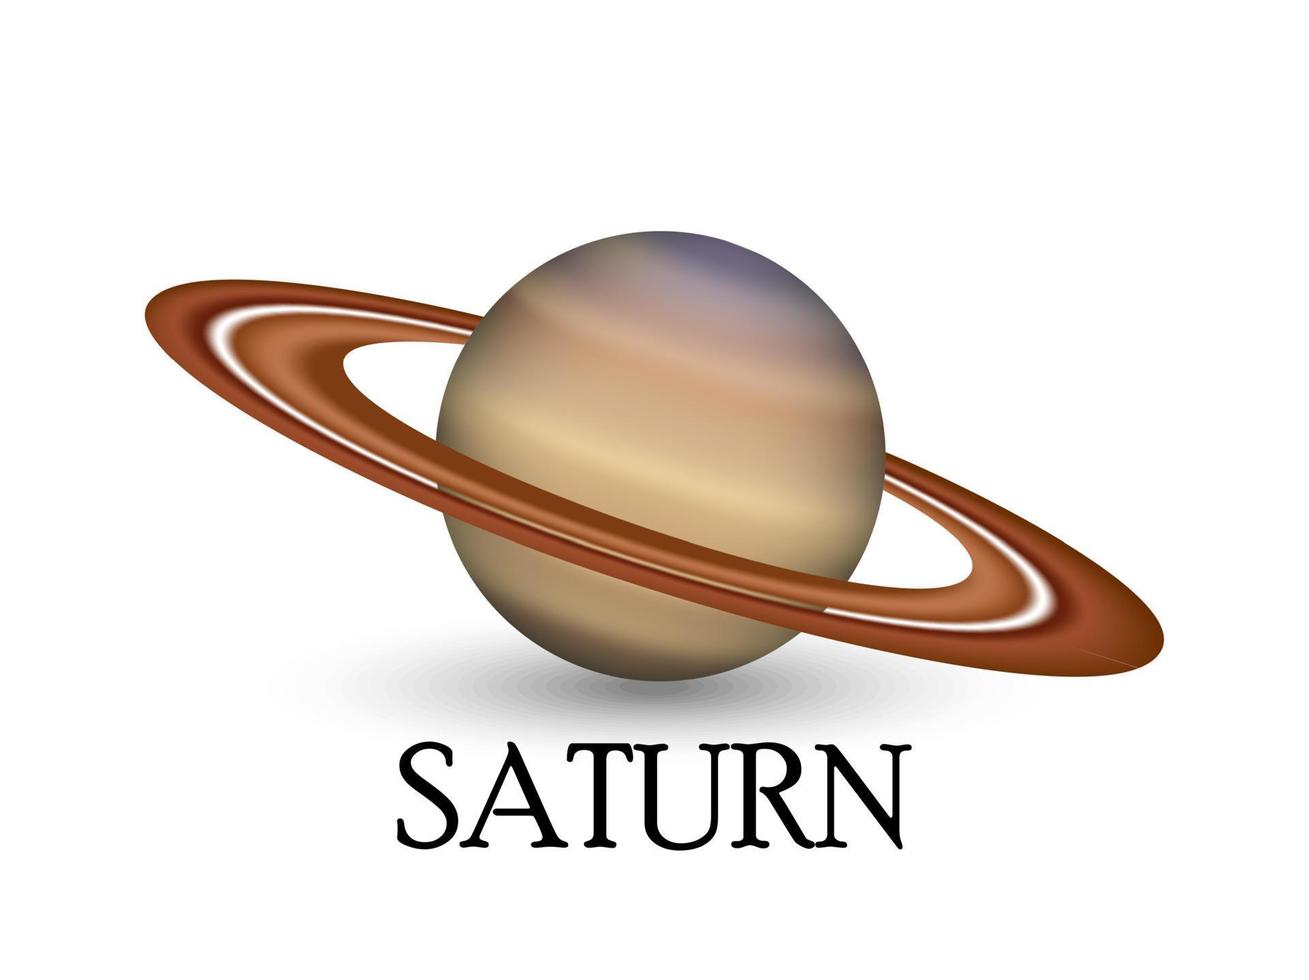 planet saturn illustration vektor